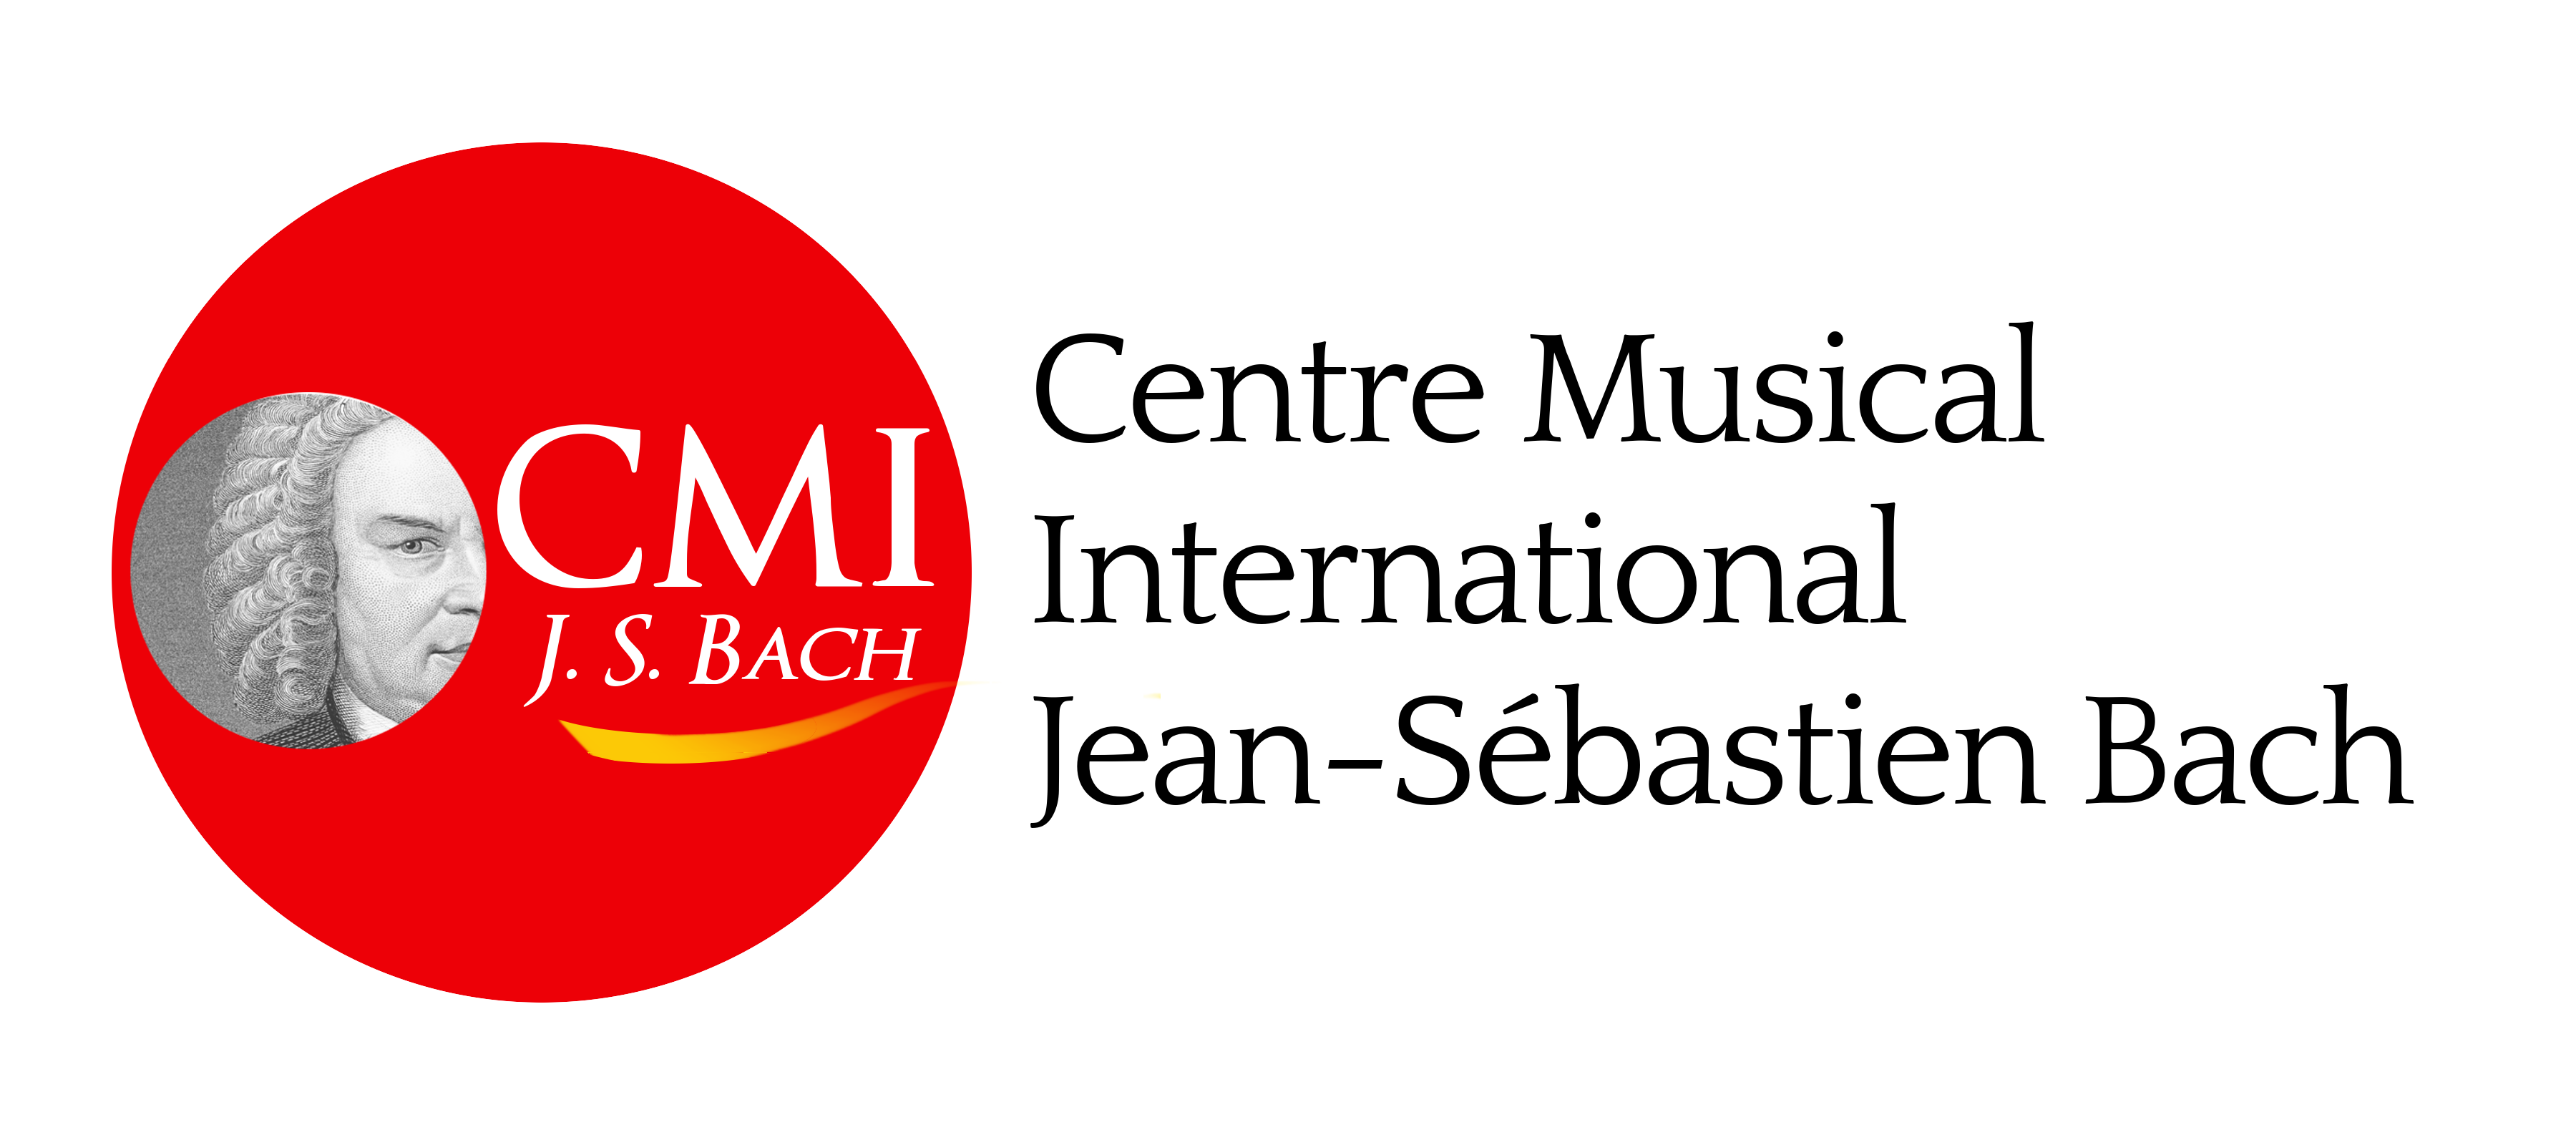 Centre Musical International J.S. Bach